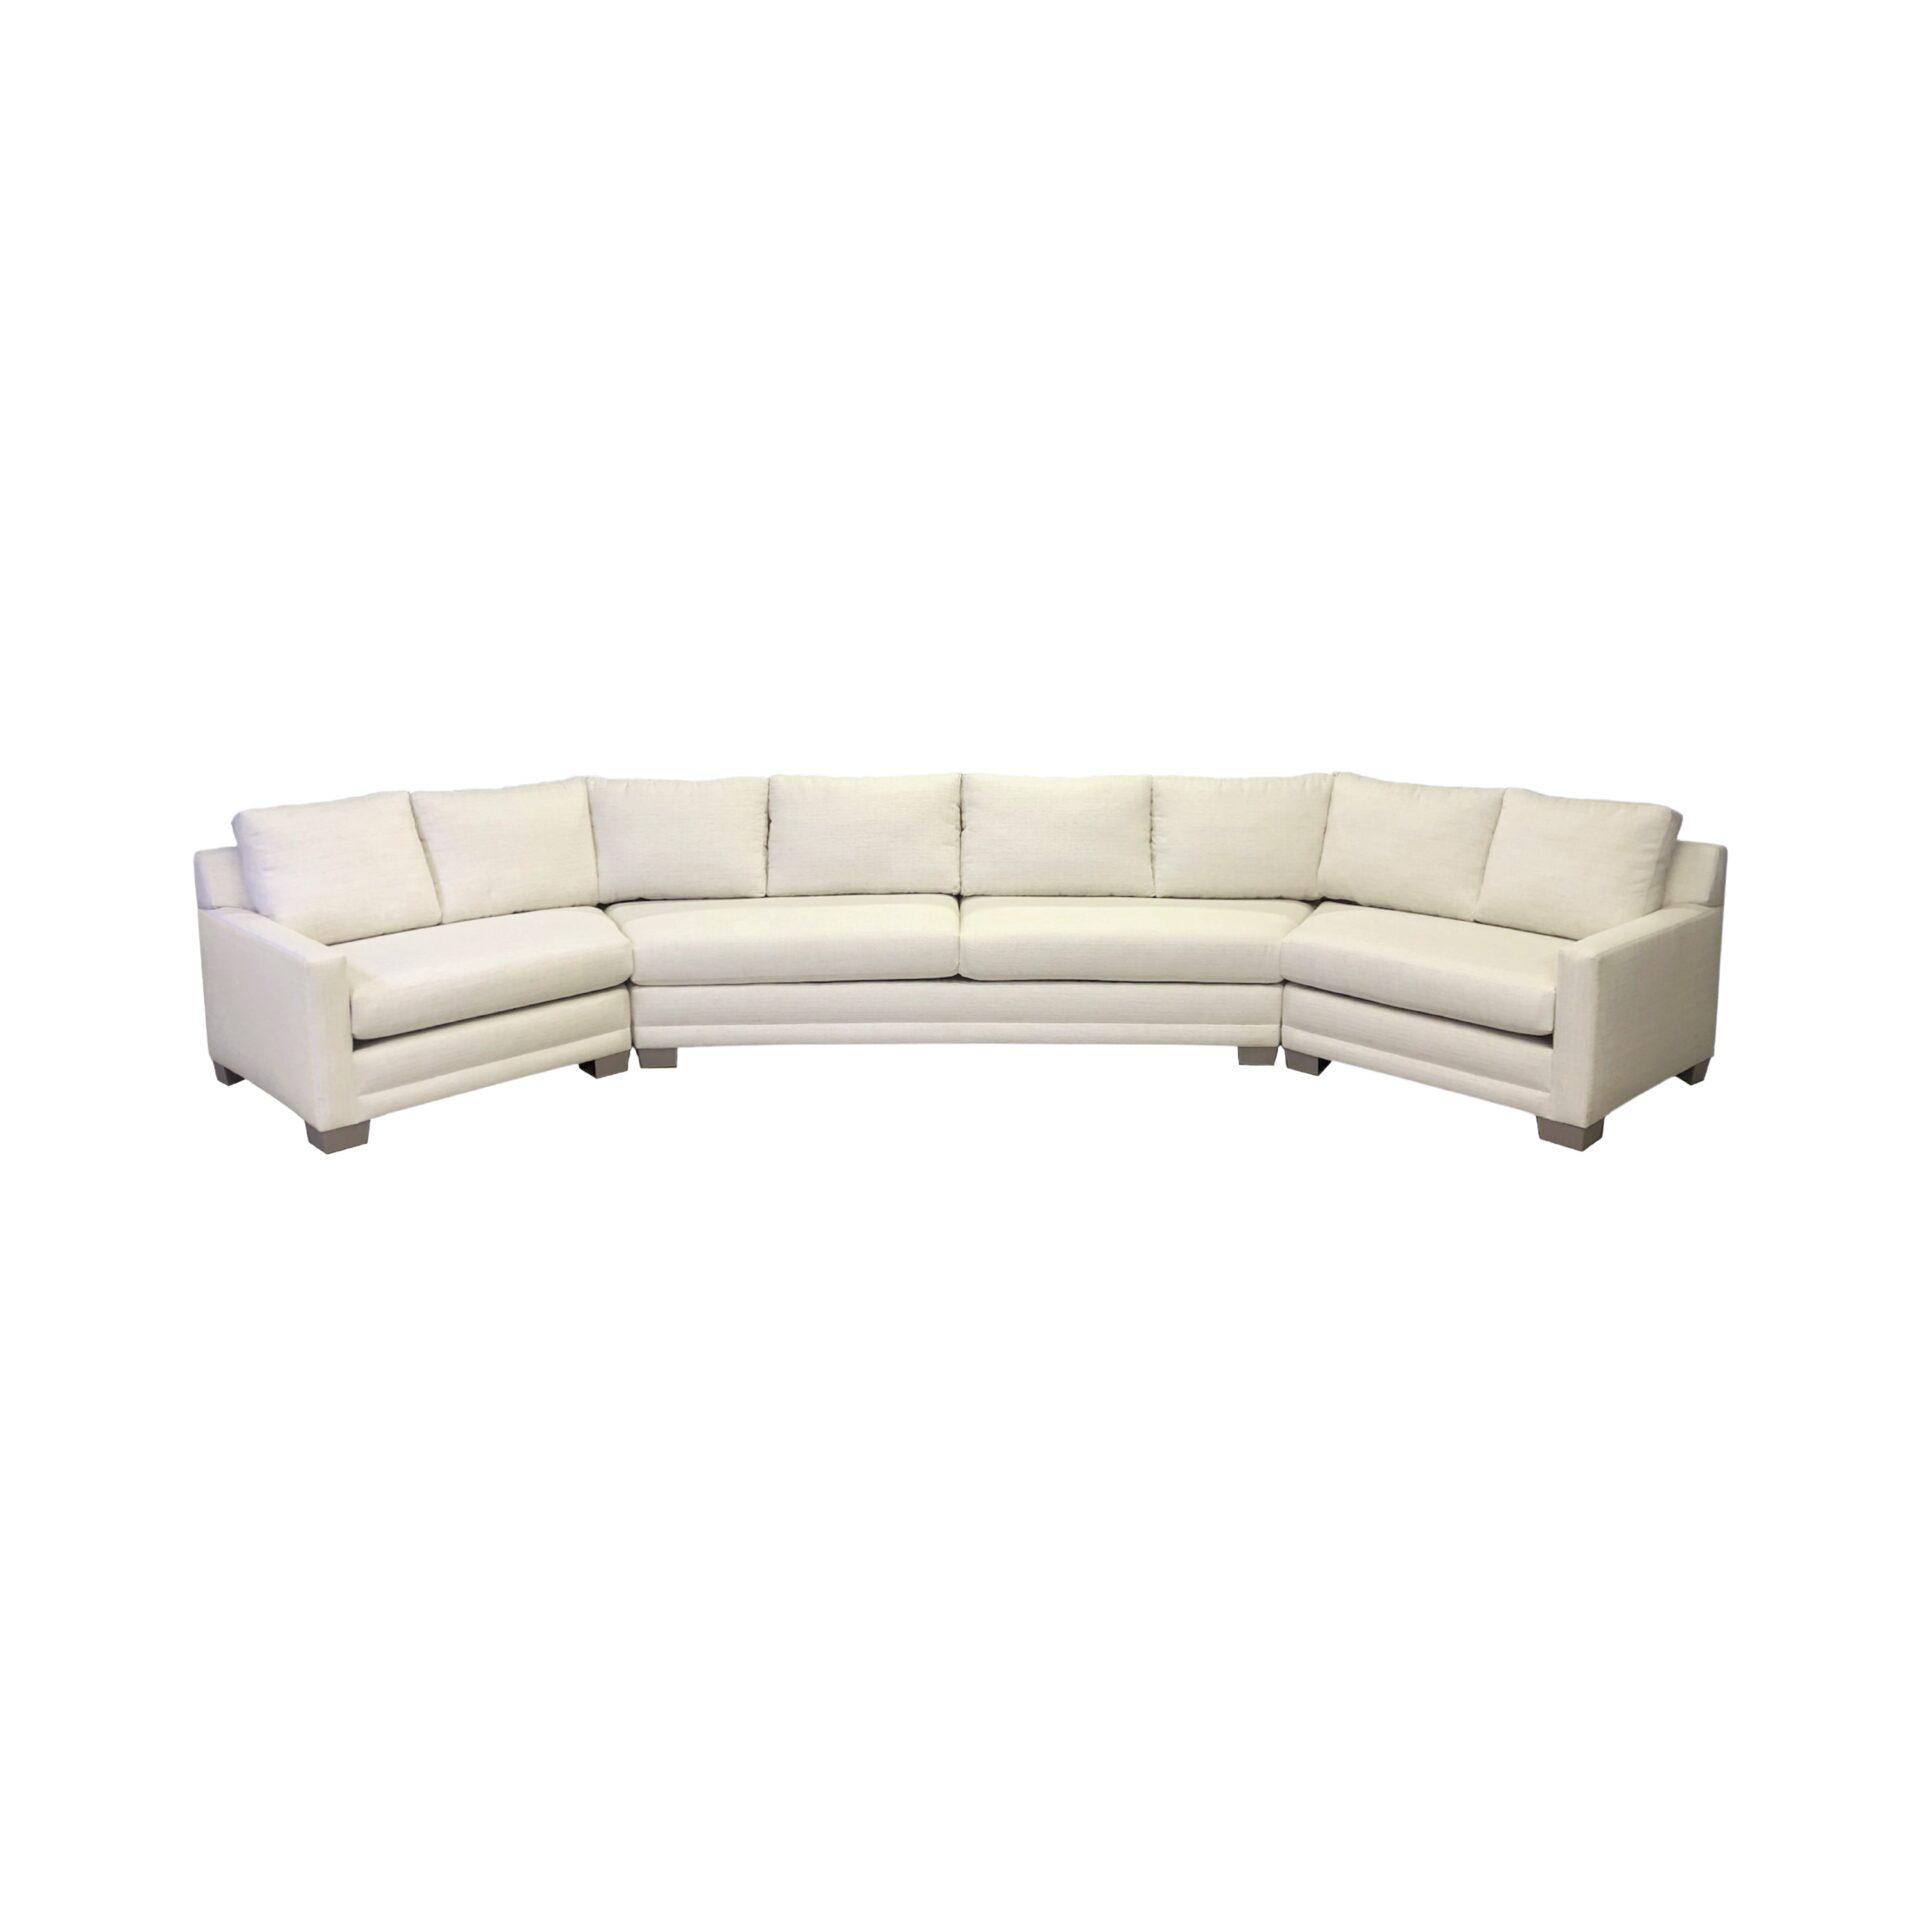 ULTIMA-upholstered-sofa-luxury-furniture-blend-home-furnishings